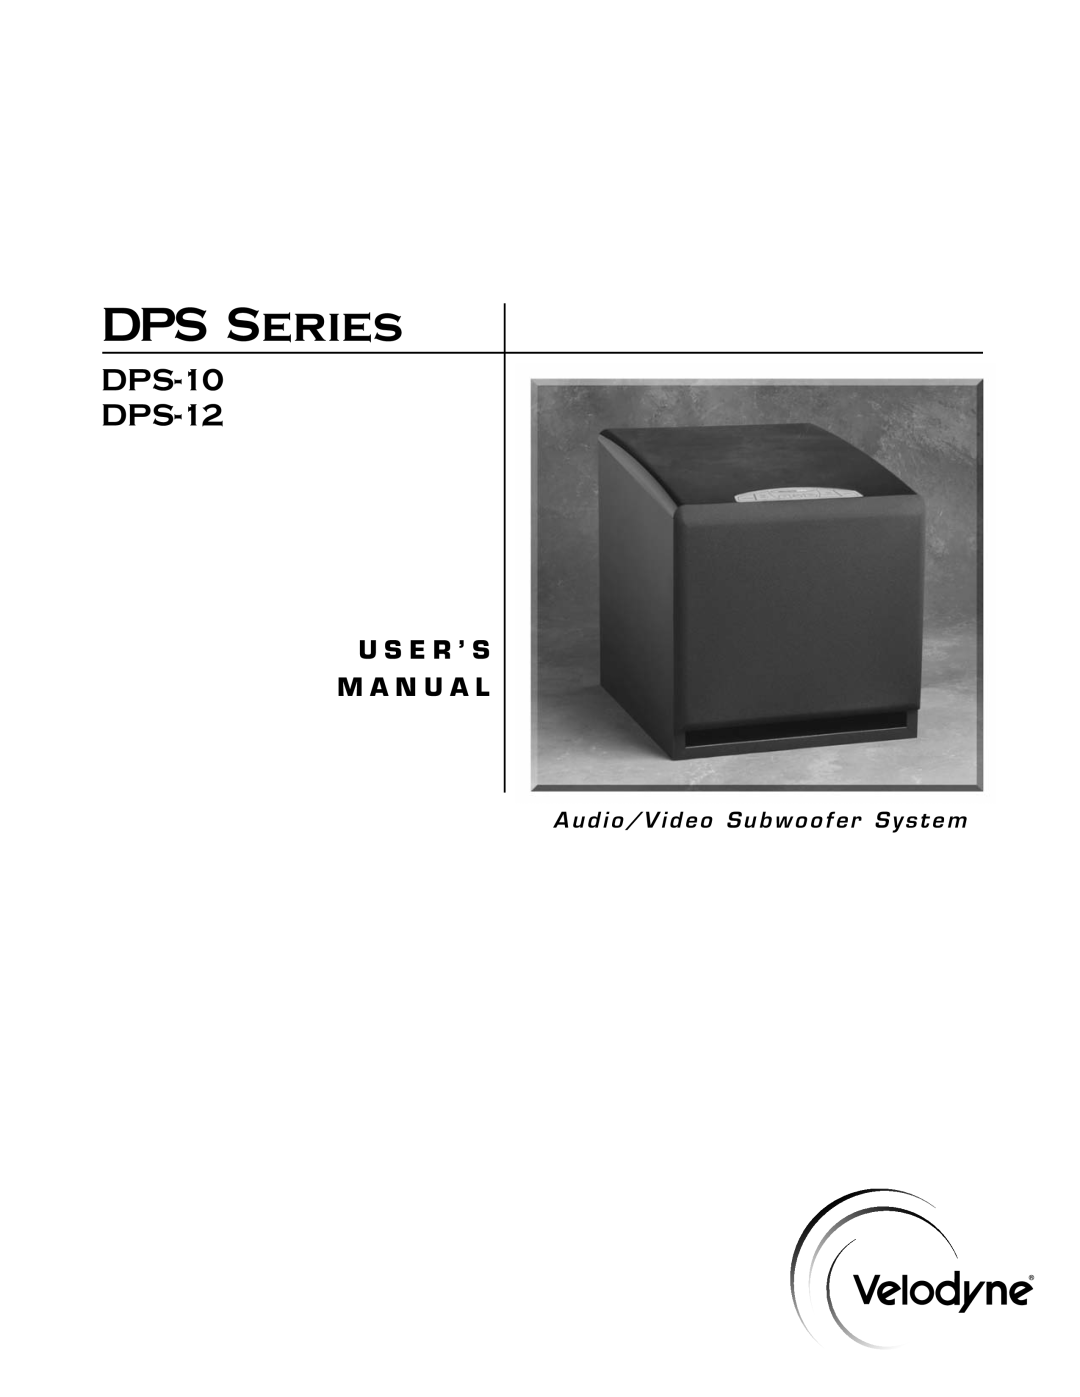 Velodyne Acoustics user manual DPS-10TM and DPS-12TM, Audio/Video Subwoofer System 